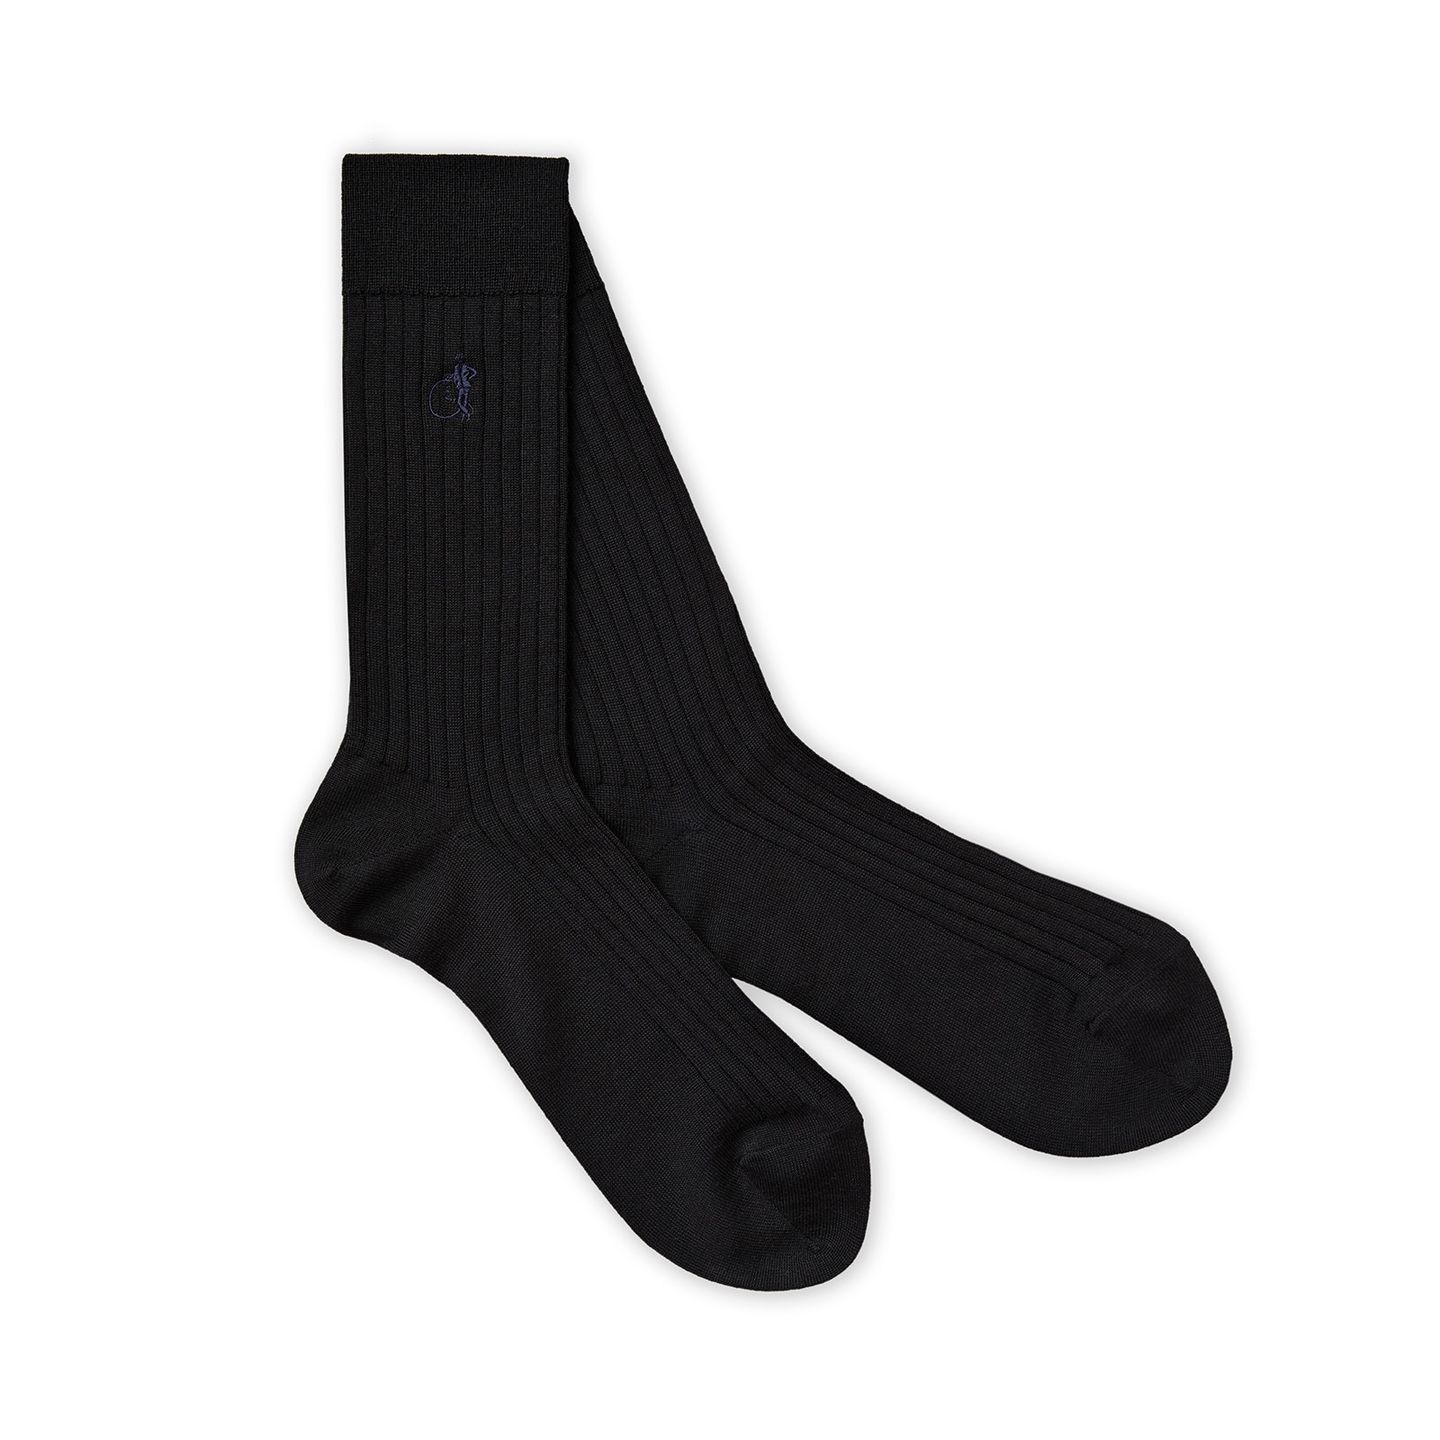 Merino black socks on a white background